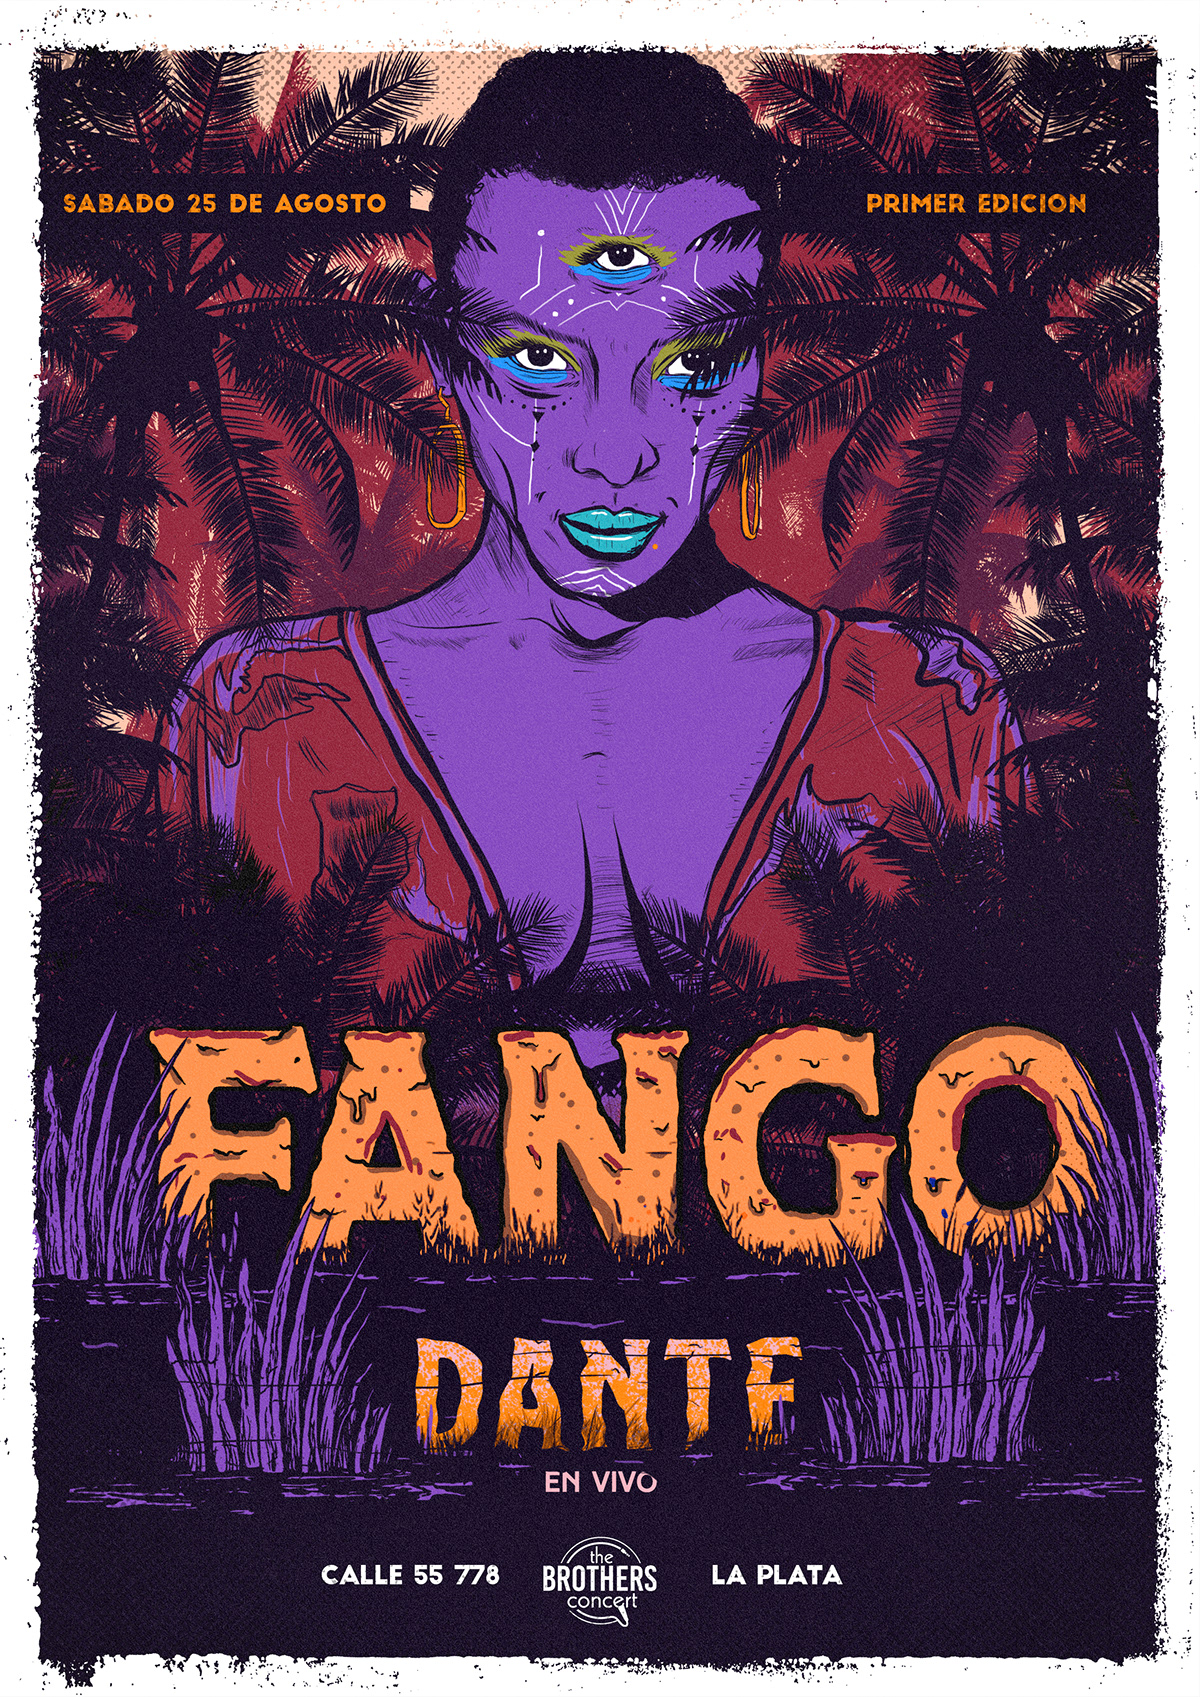 fango dante musica festival flyer poster gig bass dubstep tribal